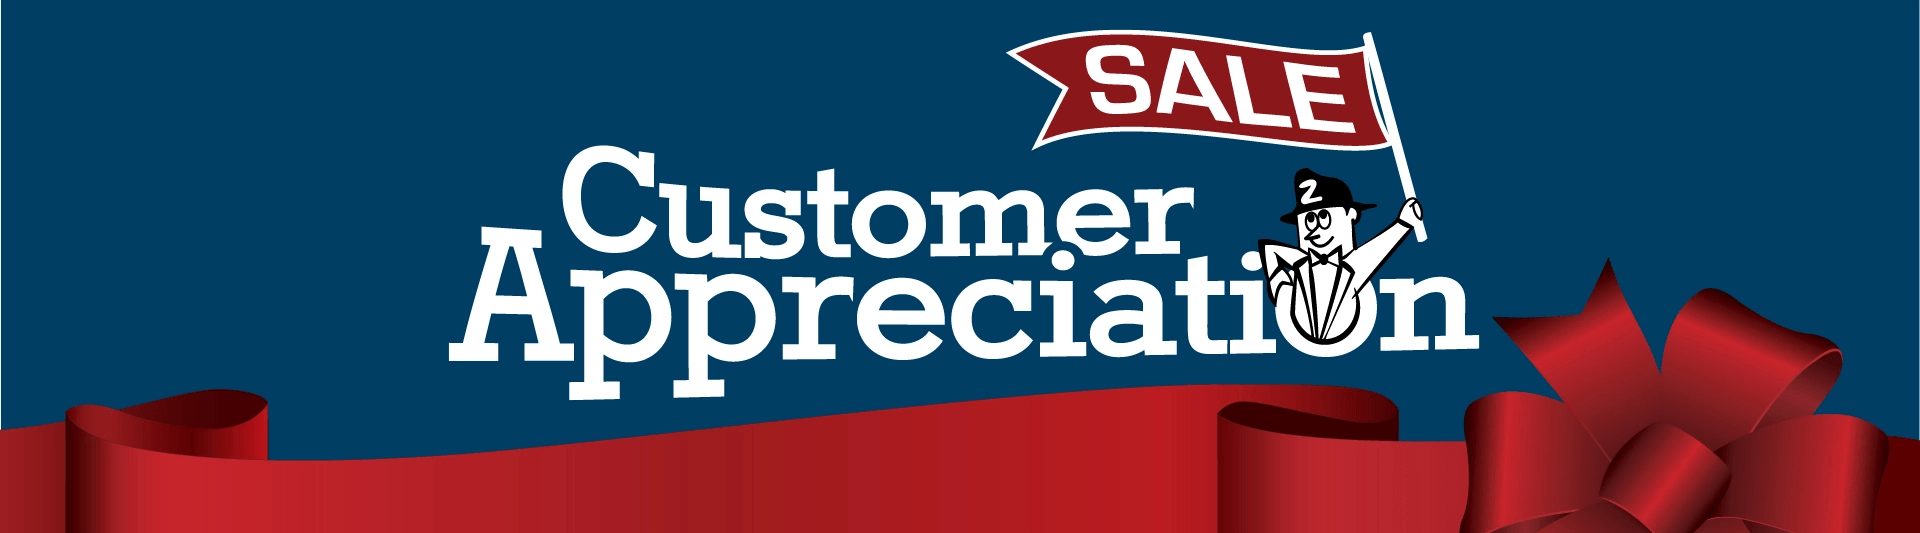 Customer Appreciation Sale banner image